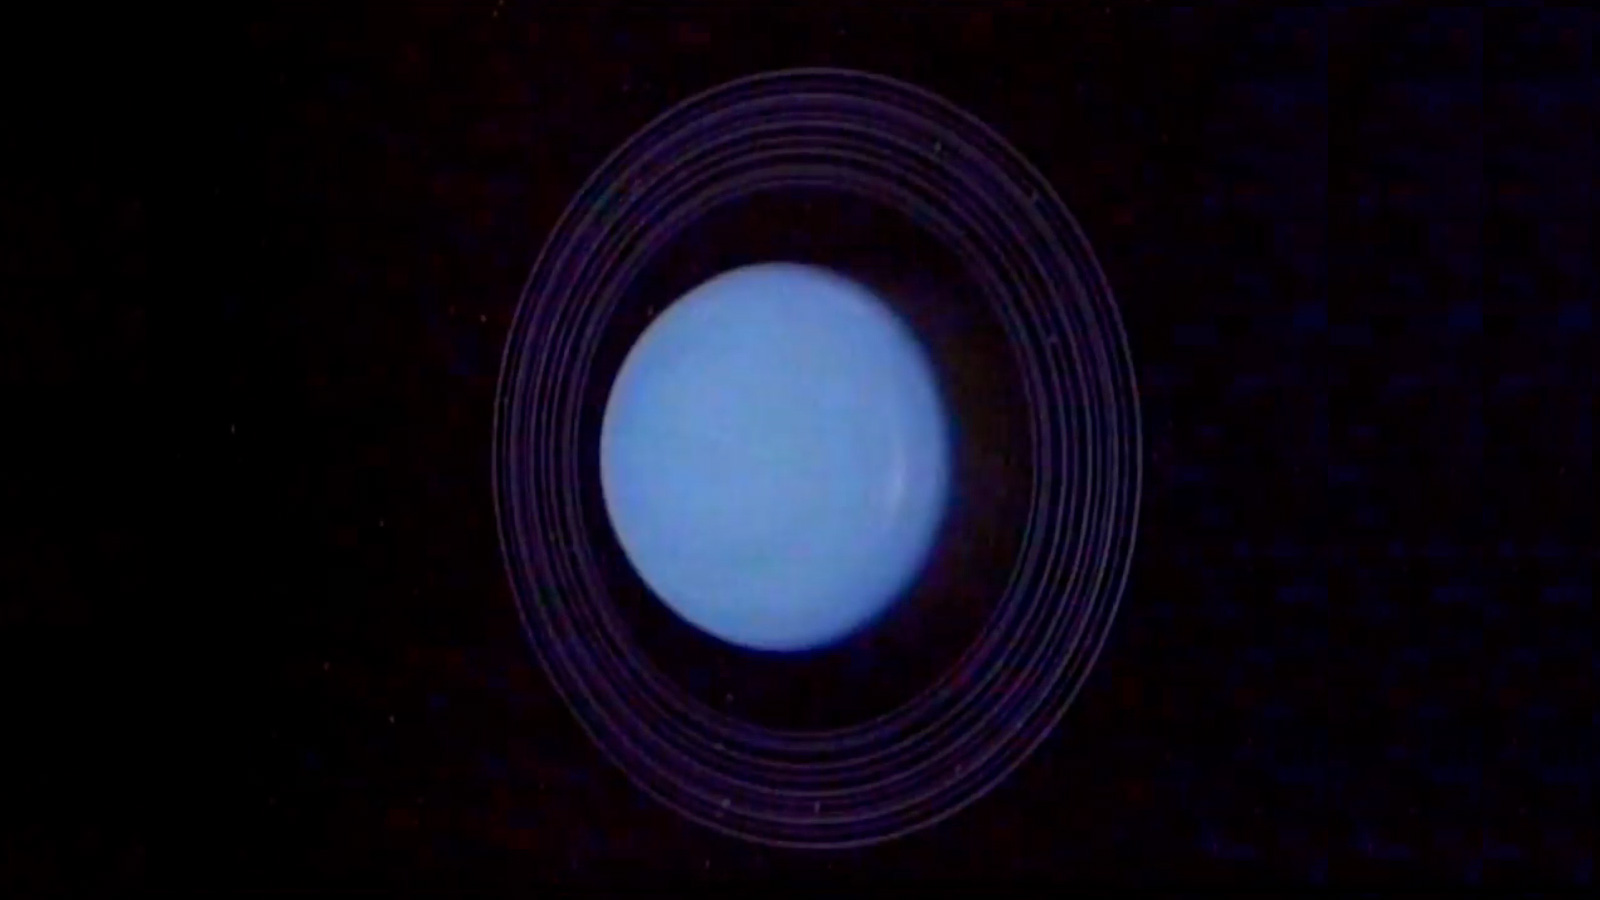 Uranus seen by Voyager 2